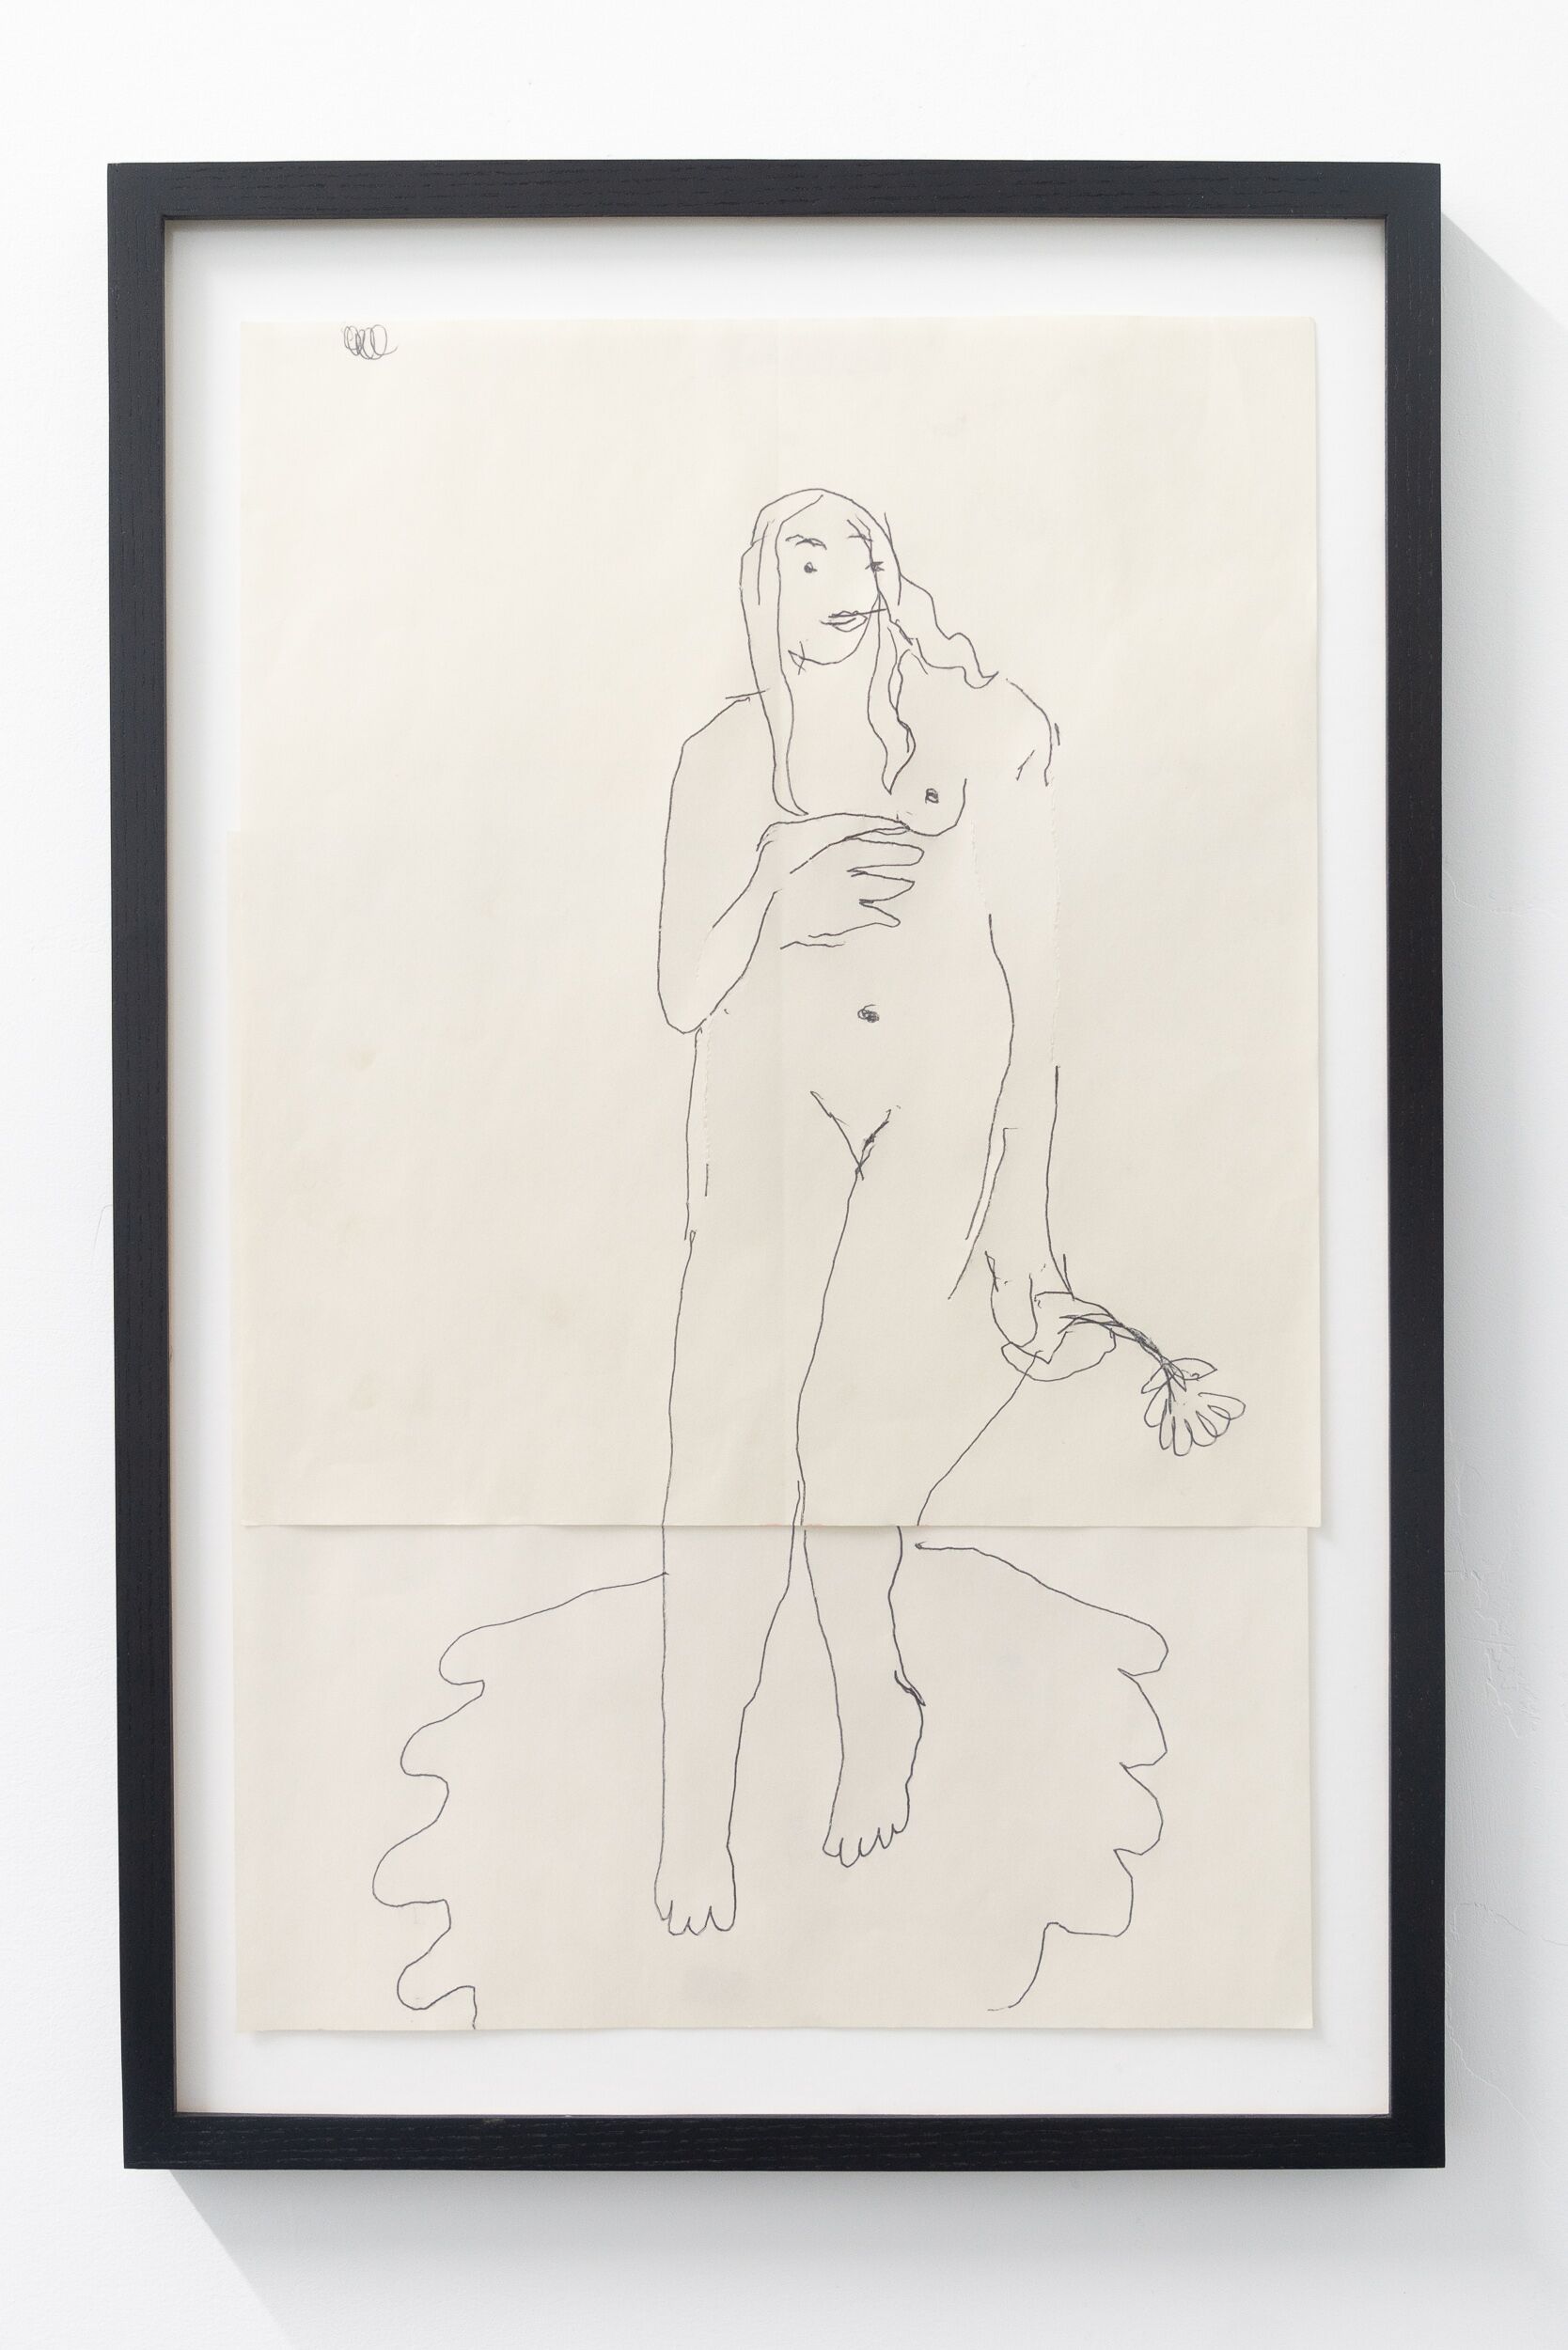   Emilie Gossiaux   Venus , 2018 Ink on newsprint 26 1/2 x 17 1/2 inches 67.3 x 44.5 cm  